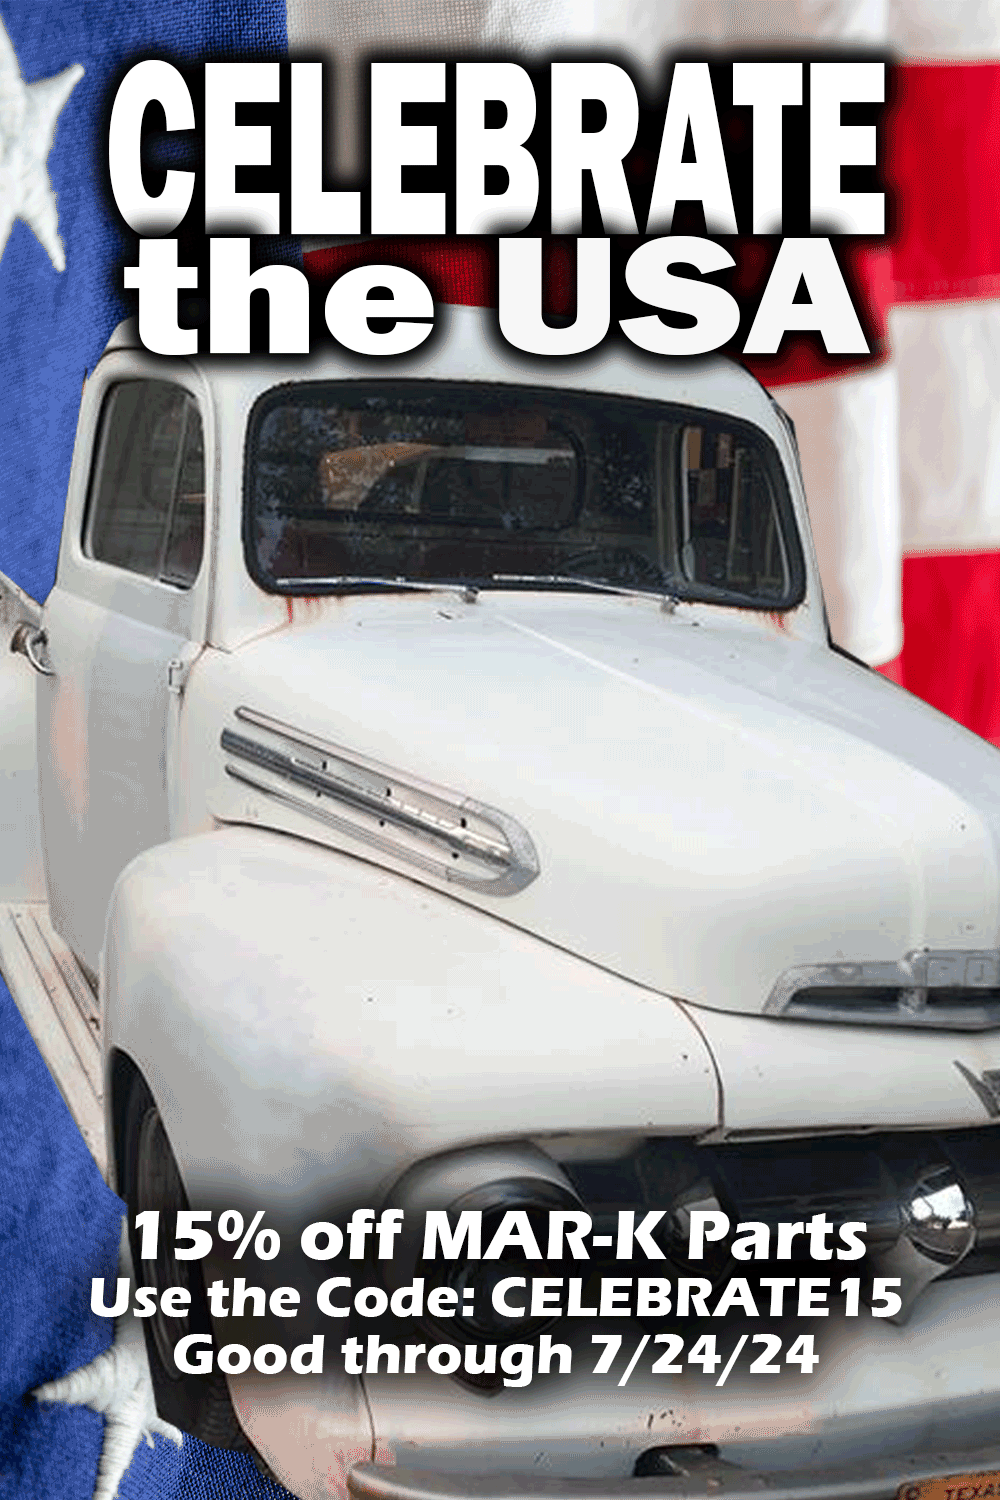 Celebrate the USA! Get 15% off MAR-K parts through 7/24/24